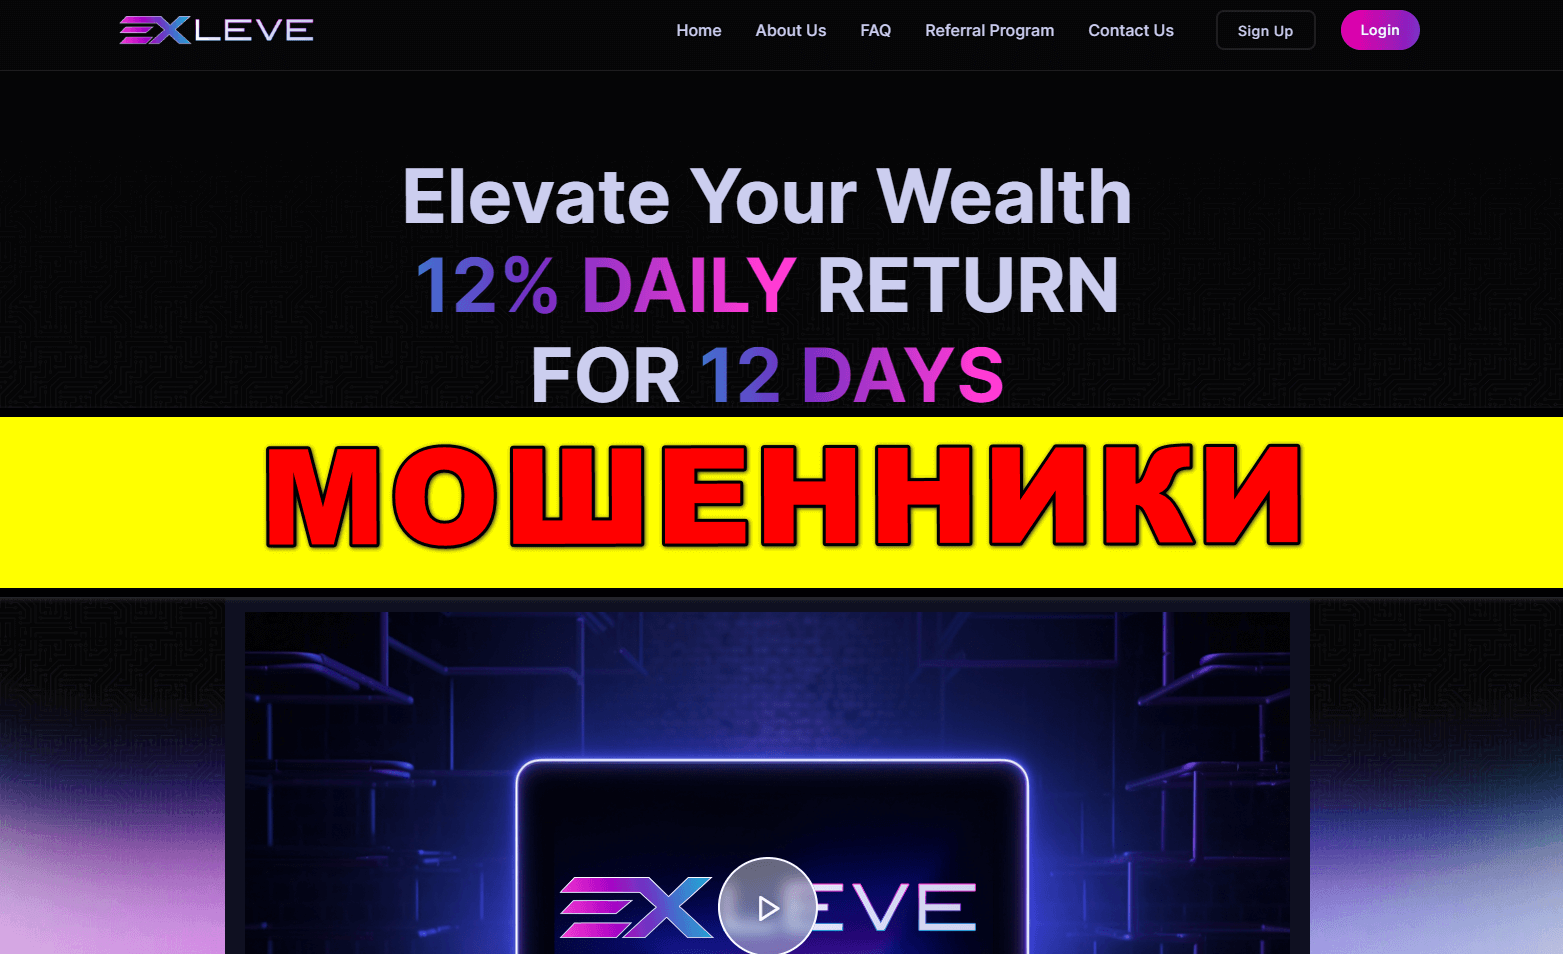 exleve.com